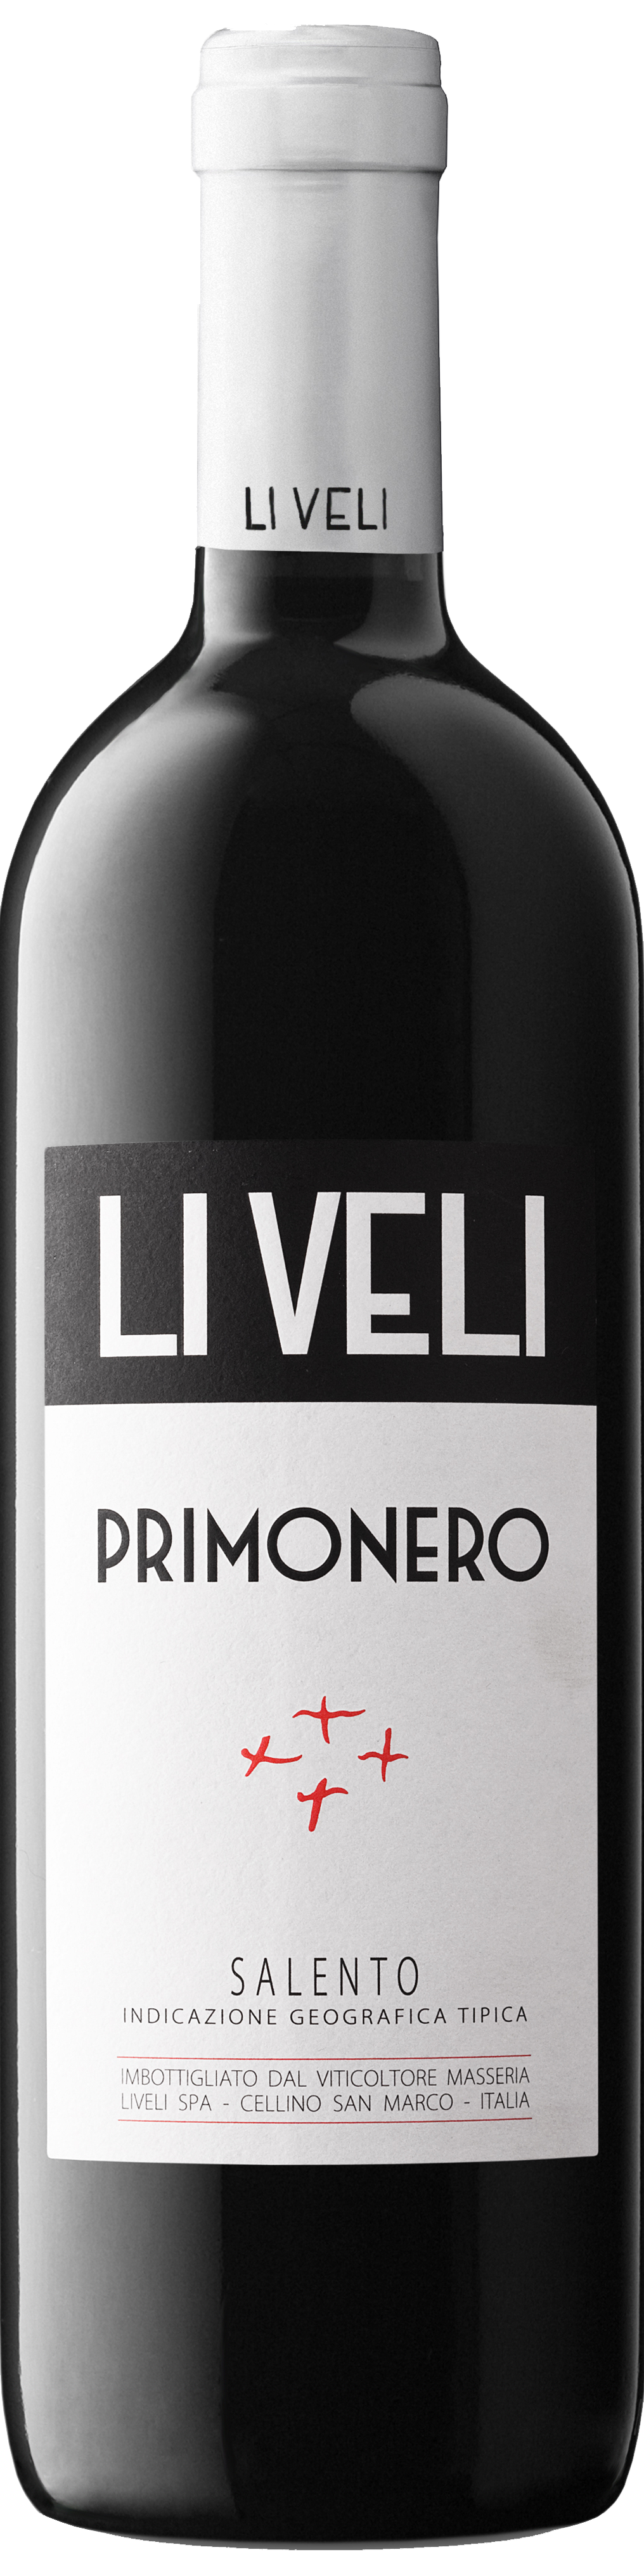 Bottle shot of 2015 Primonero